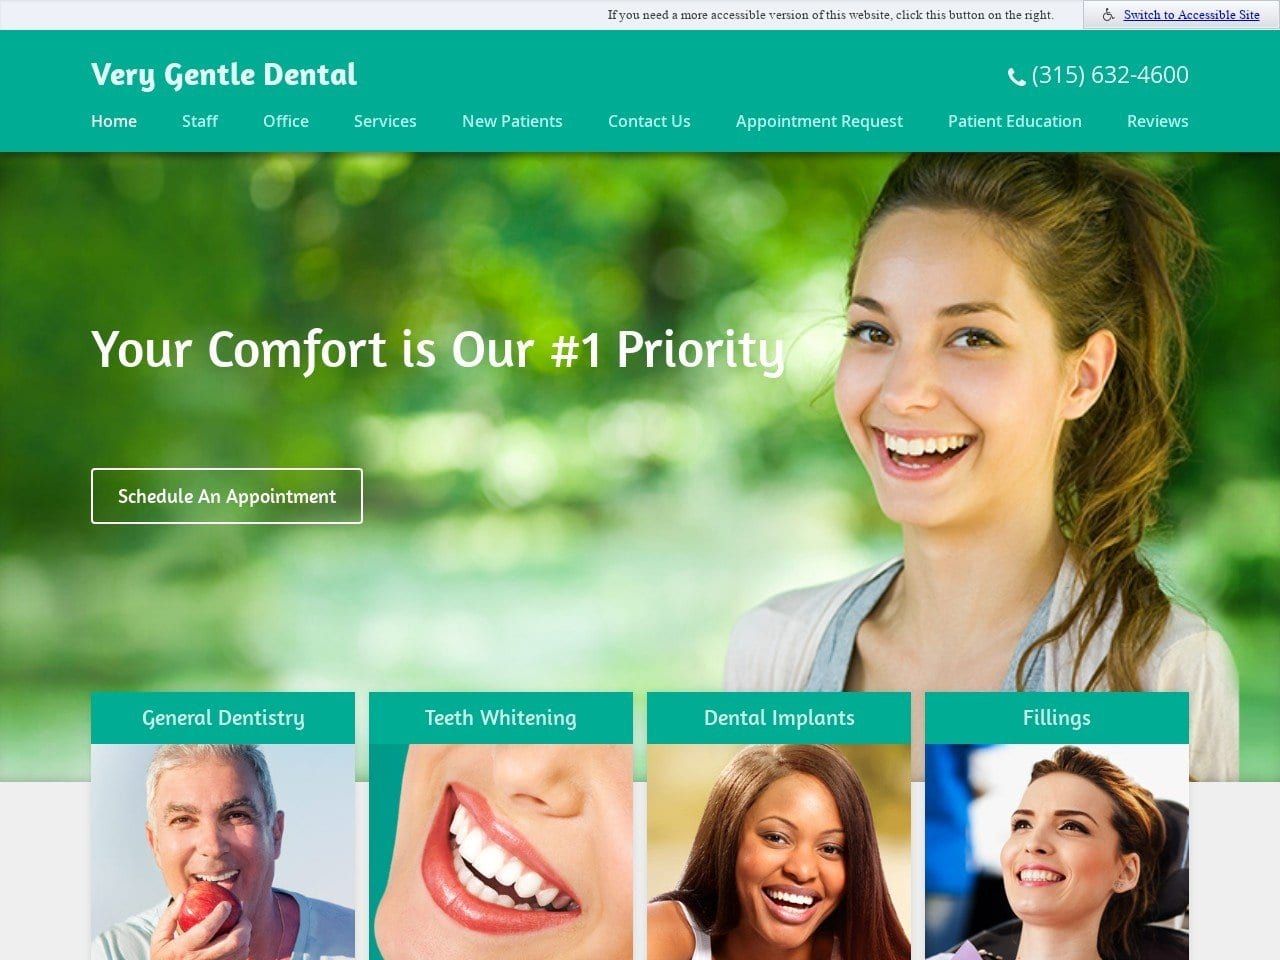 Very Gentle Dental Website Screenshot from verygentledental1.com